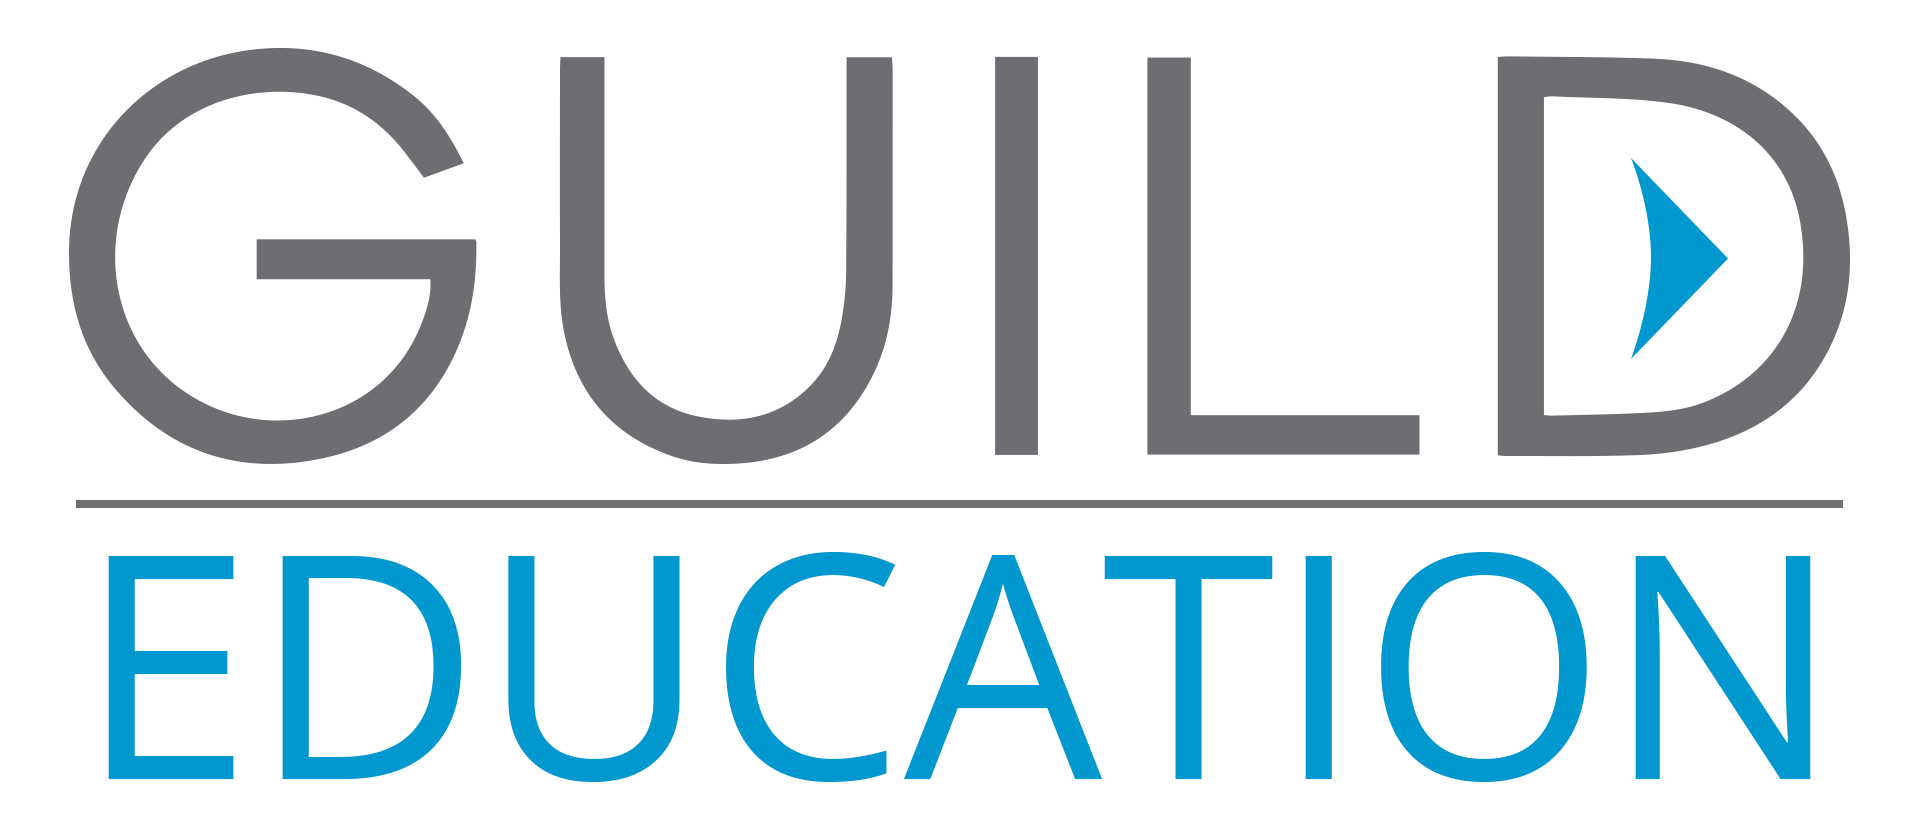 guild education logo - Lioness Magazine